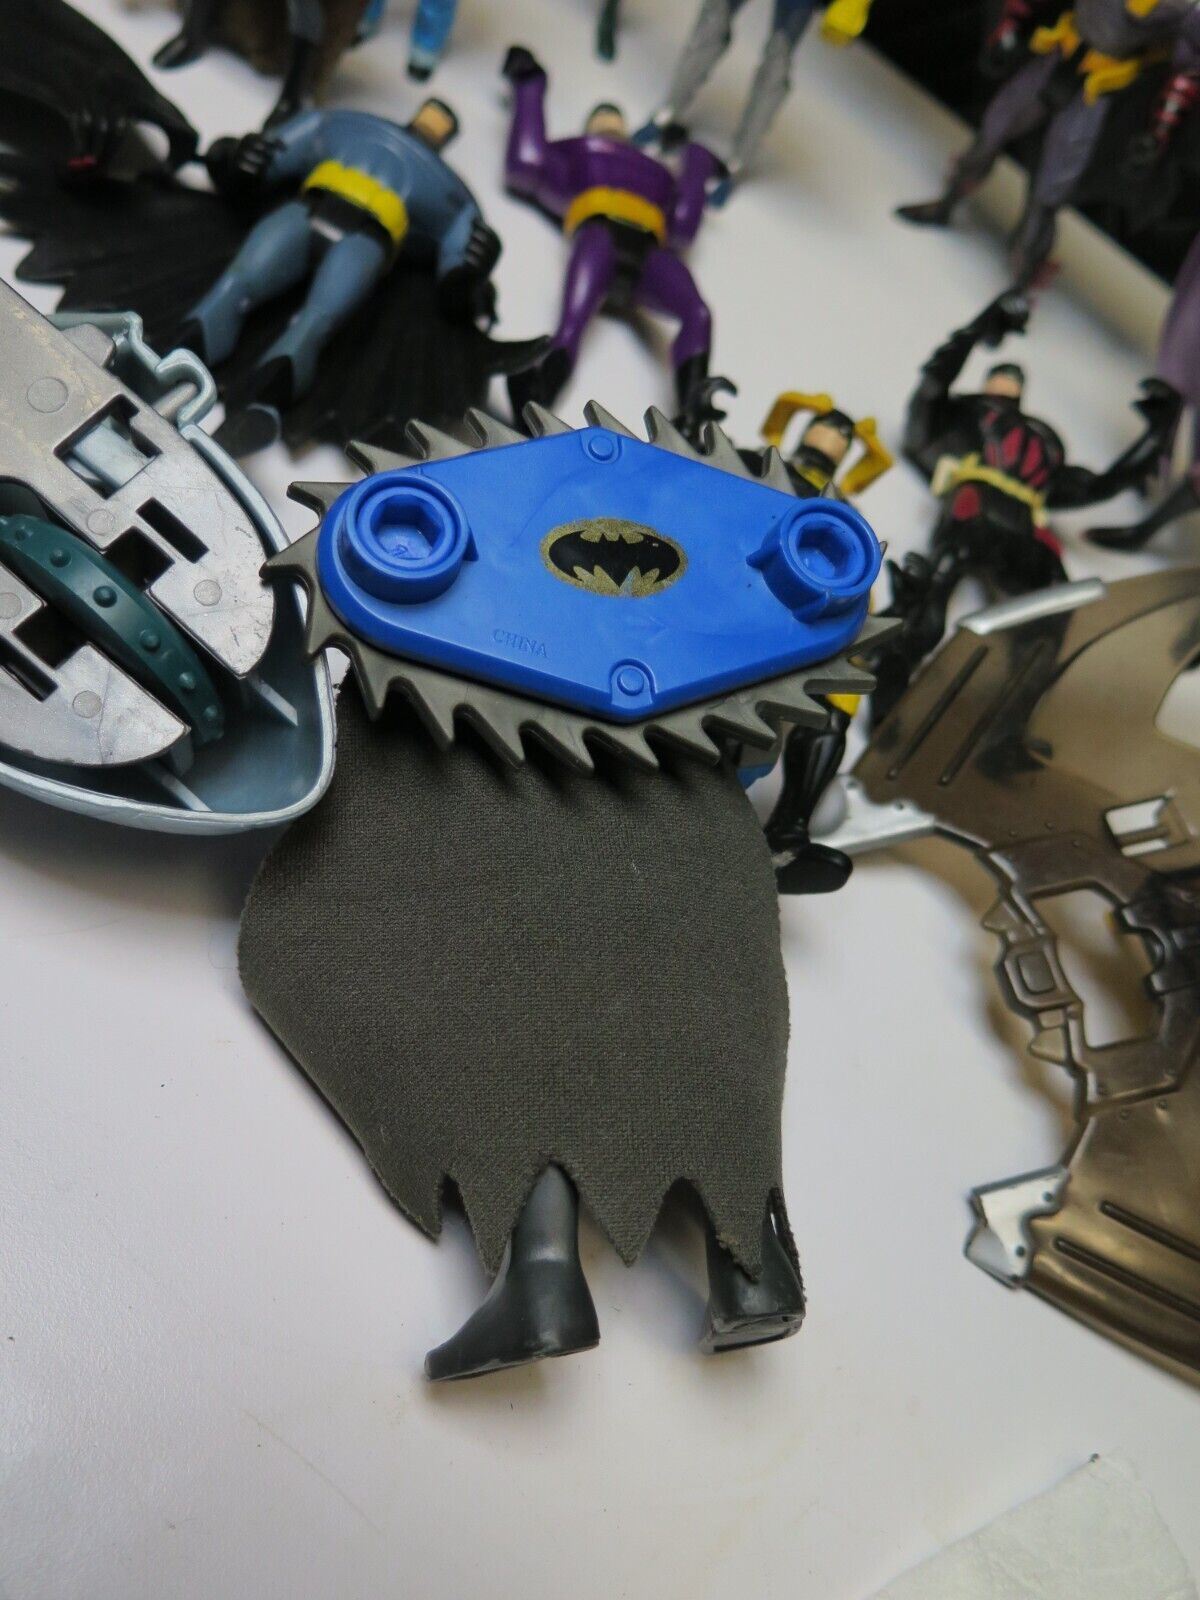 Lot - 16 DC Universe Action Figures - Batman Robin Joker Nightwing & Parts